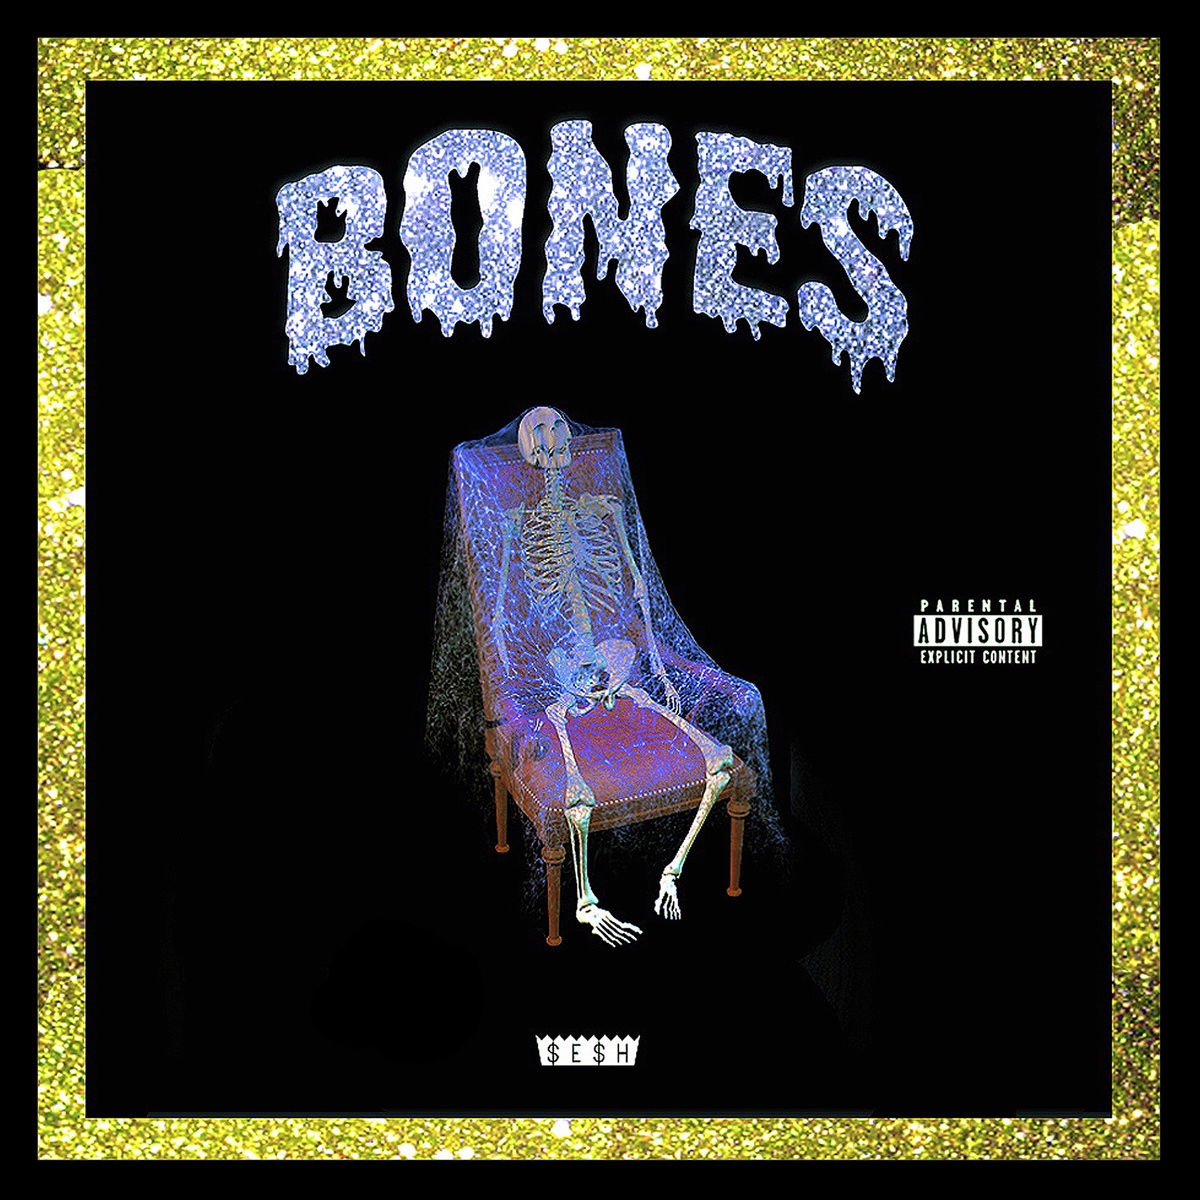 Bones take. Bones обложки альбомов. Bones (рэпер). Bones unrendered обложка. Bones обложки треков.